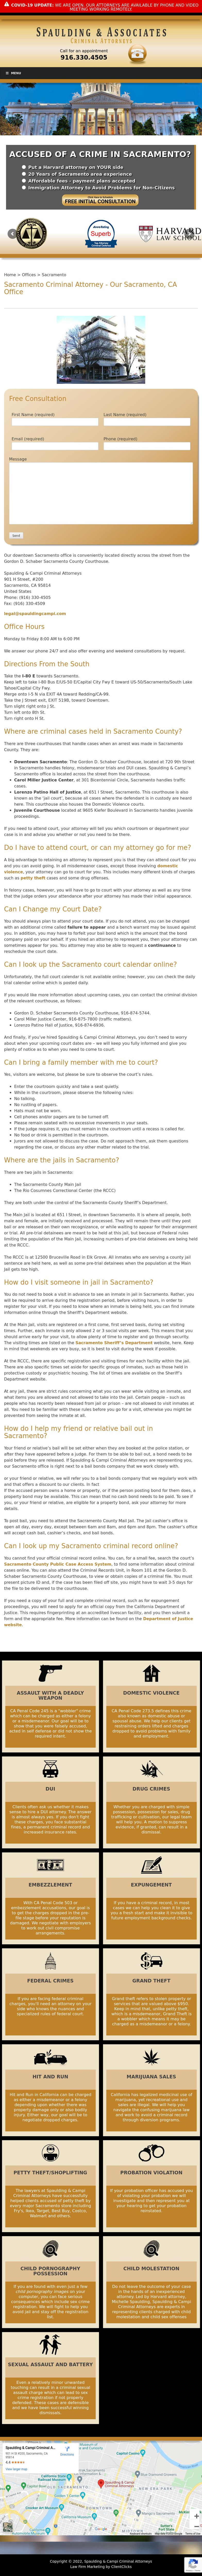 Spaulding & Campi Criminal Attorneys - Sacramento CA Lawyers